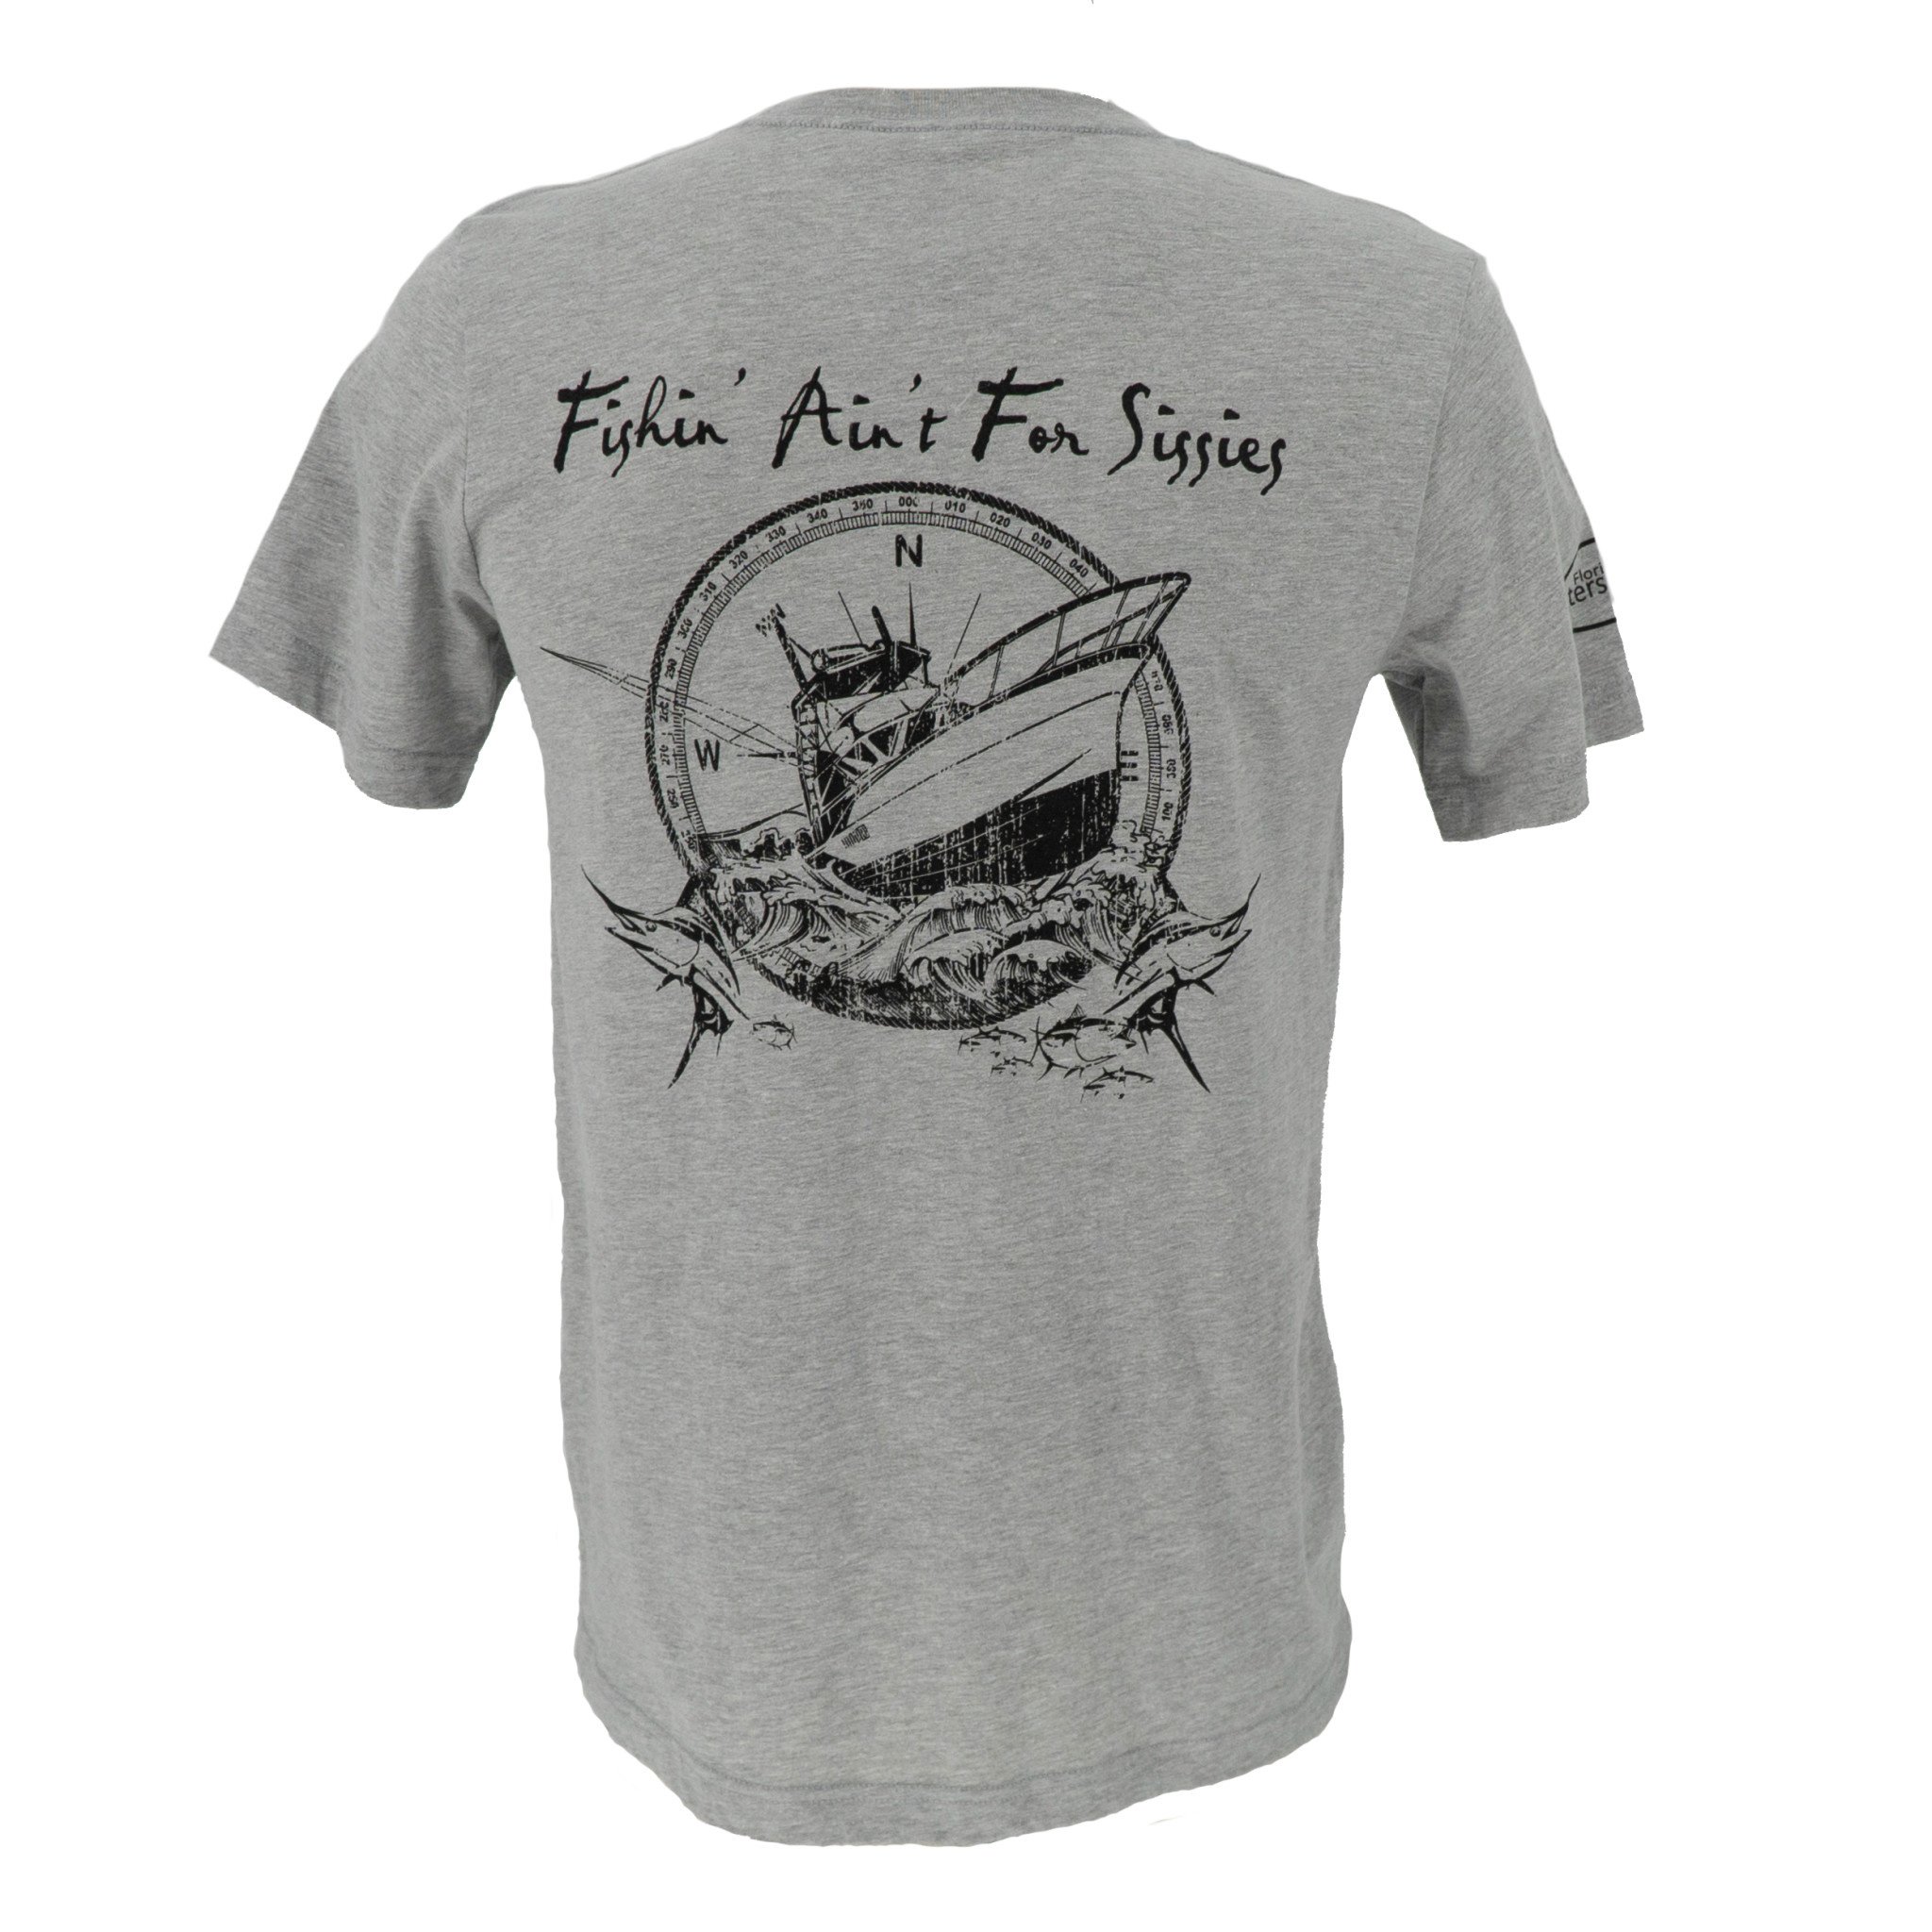 Sportfish T-Shirt - Men's